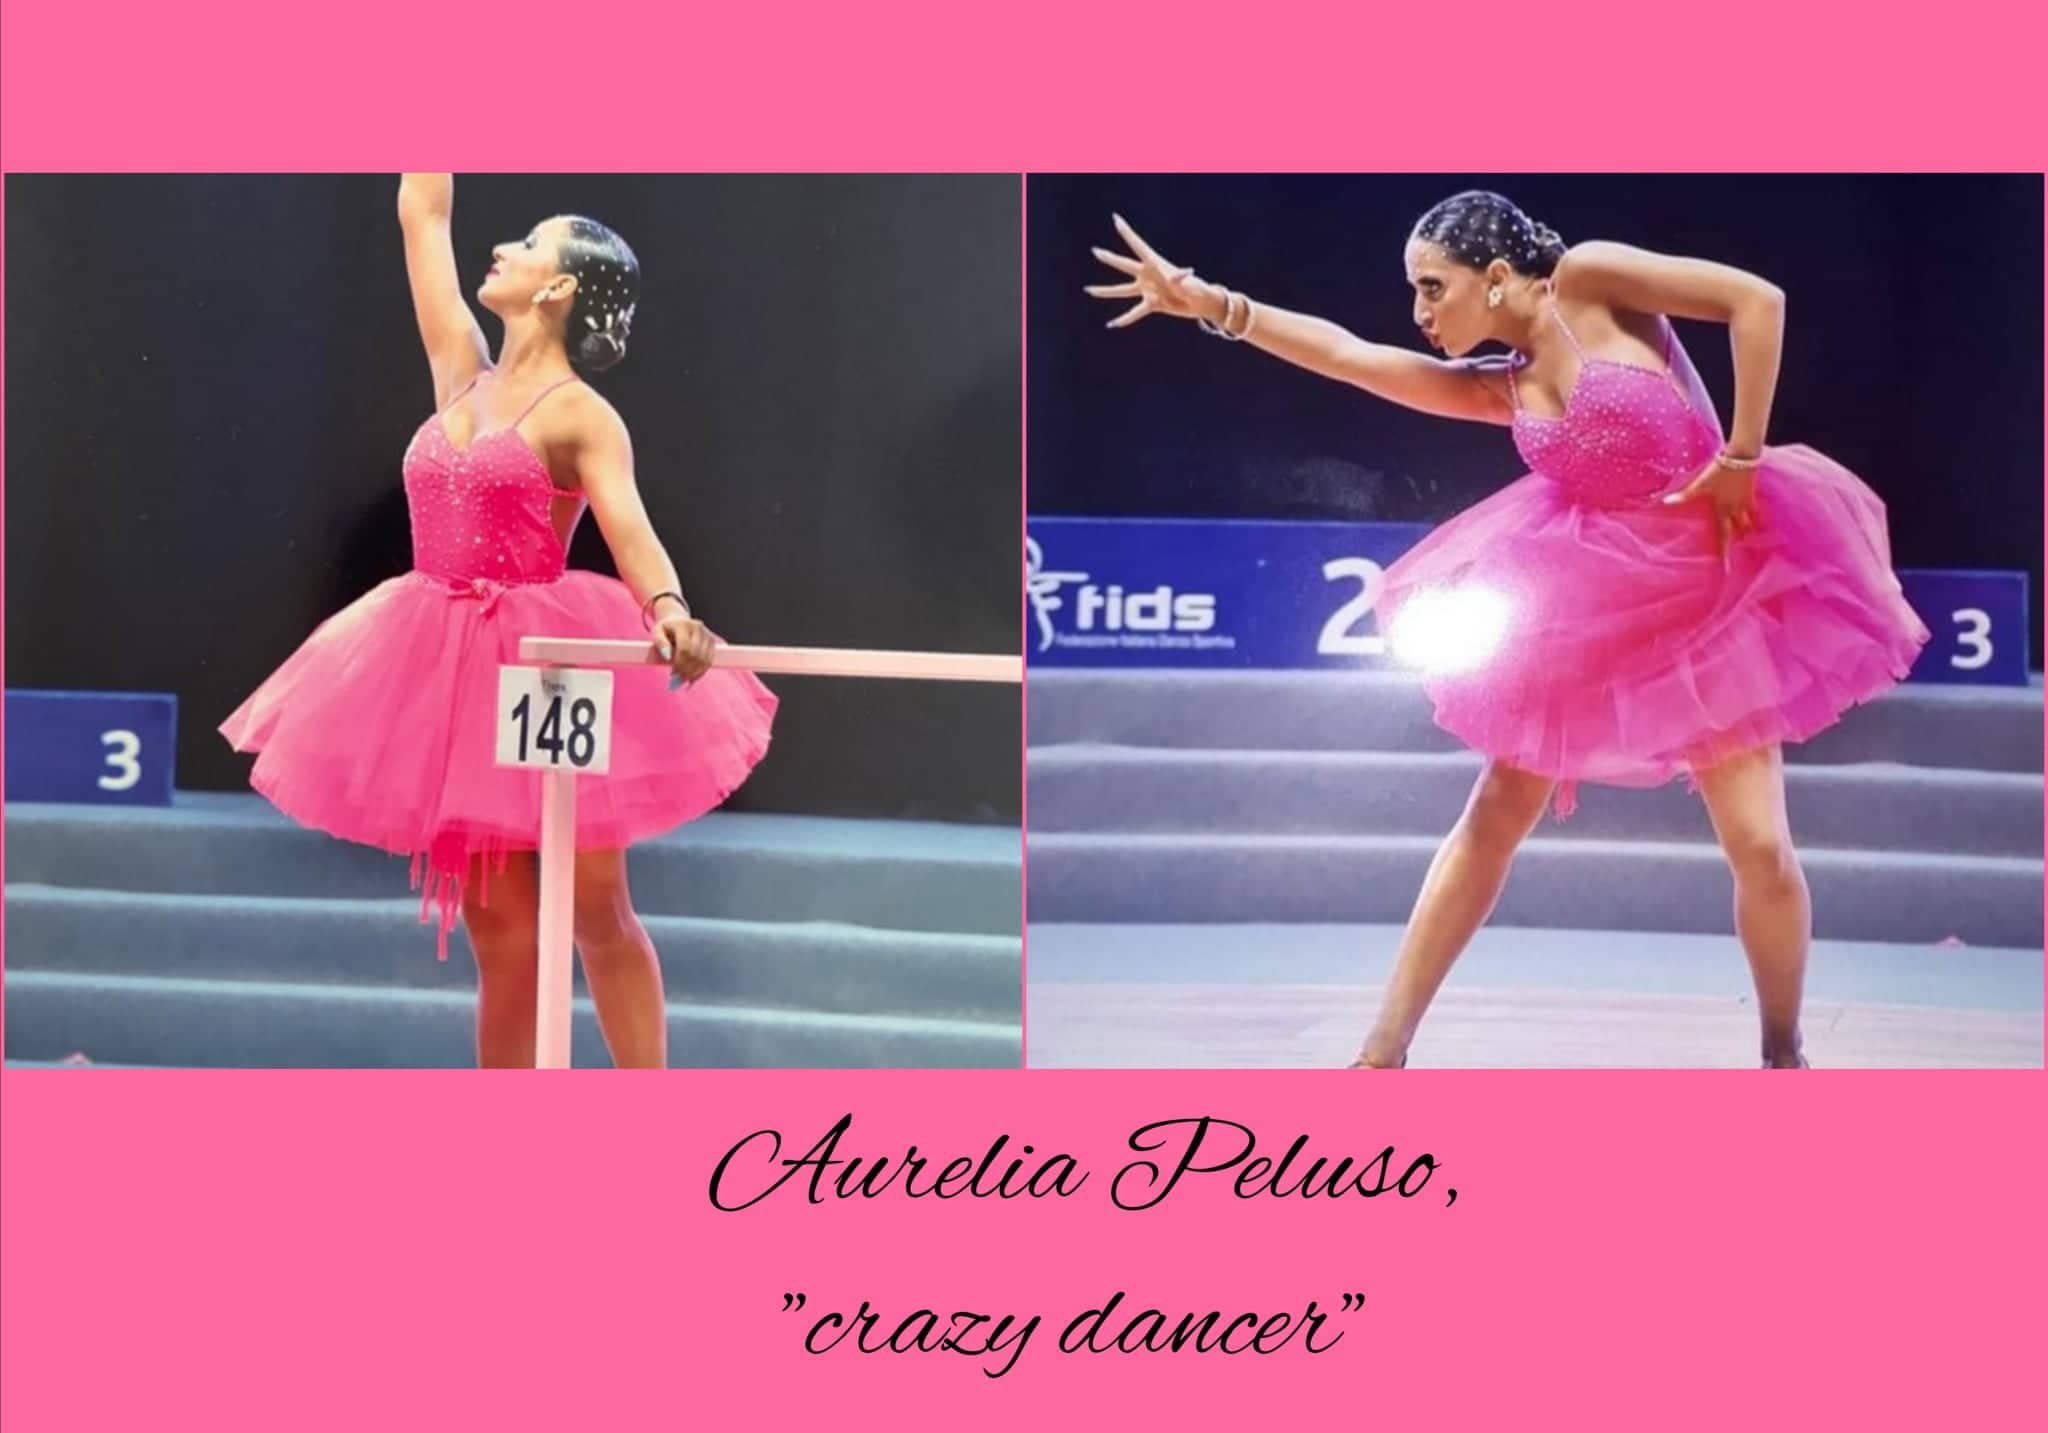 Aurelia Peluso la crazy dancer